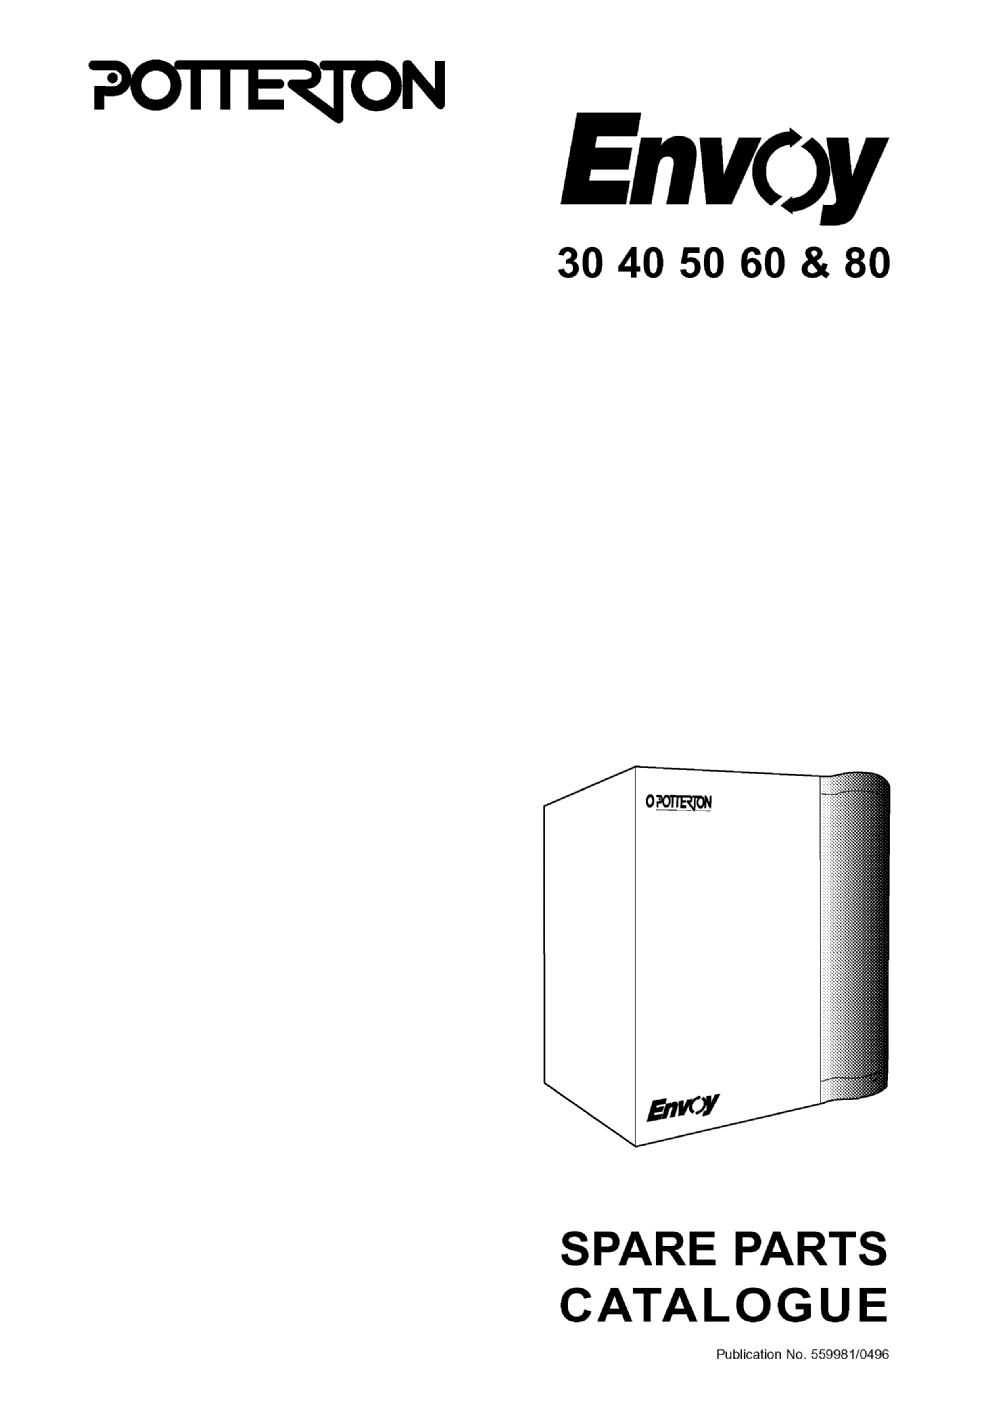 Envoy 60 - appliance_4150